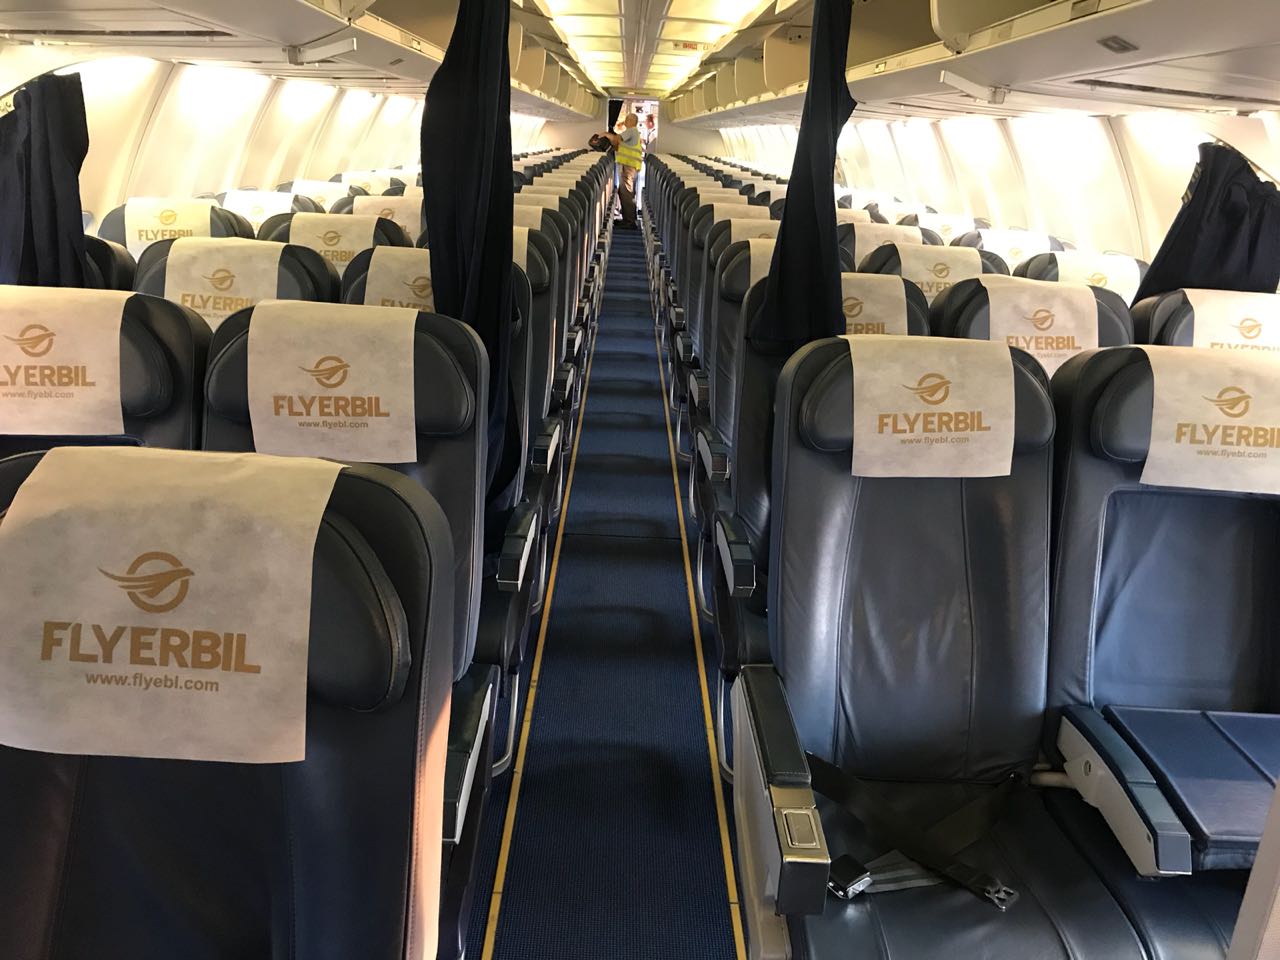 Inside Fly Erbil's 737 (Image: Fly Erbil)